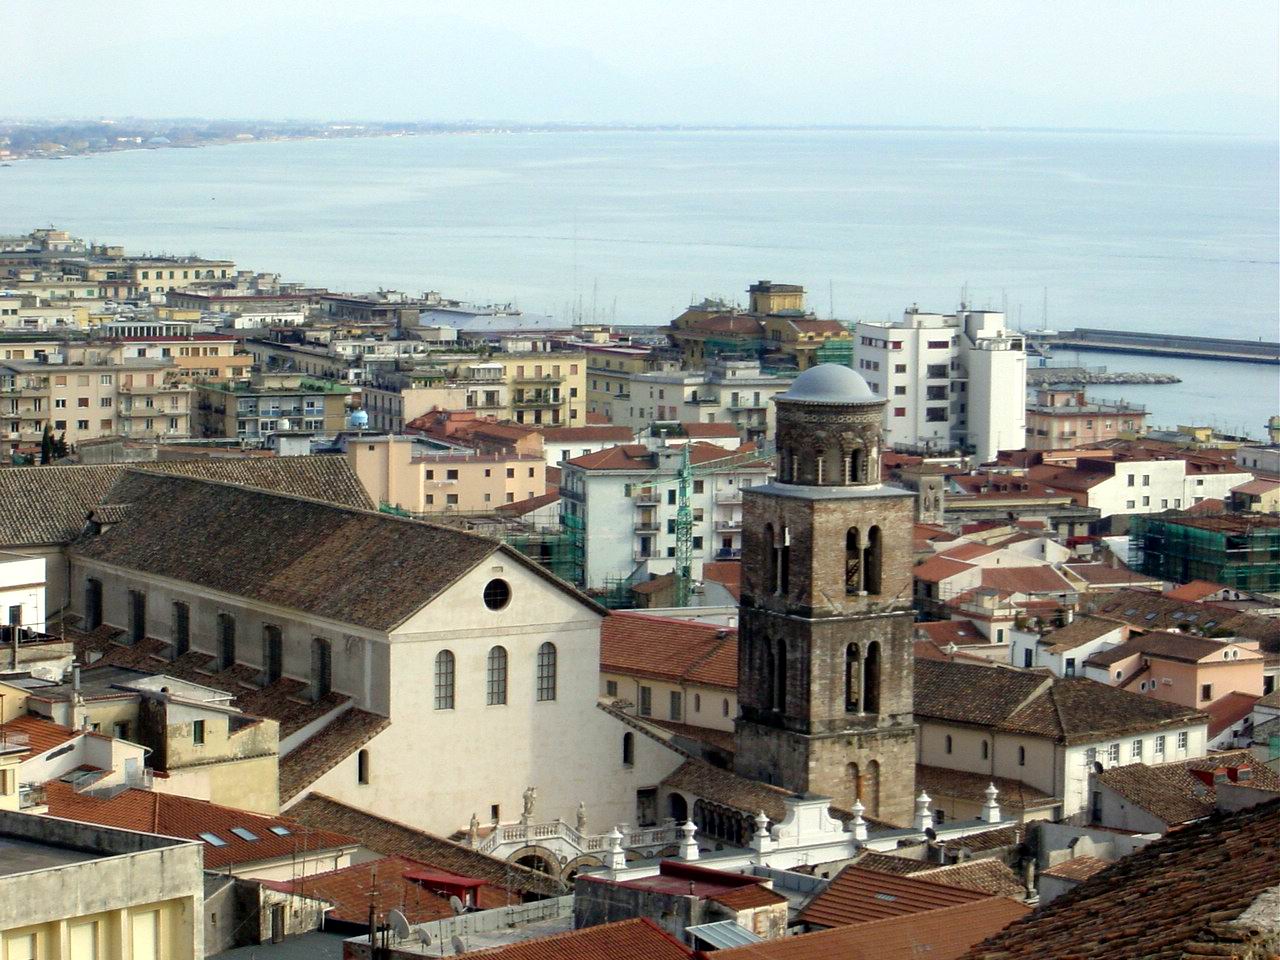 
  
    
      
      
          
Vista dall'alto Duomo Salerno

    
  
          
